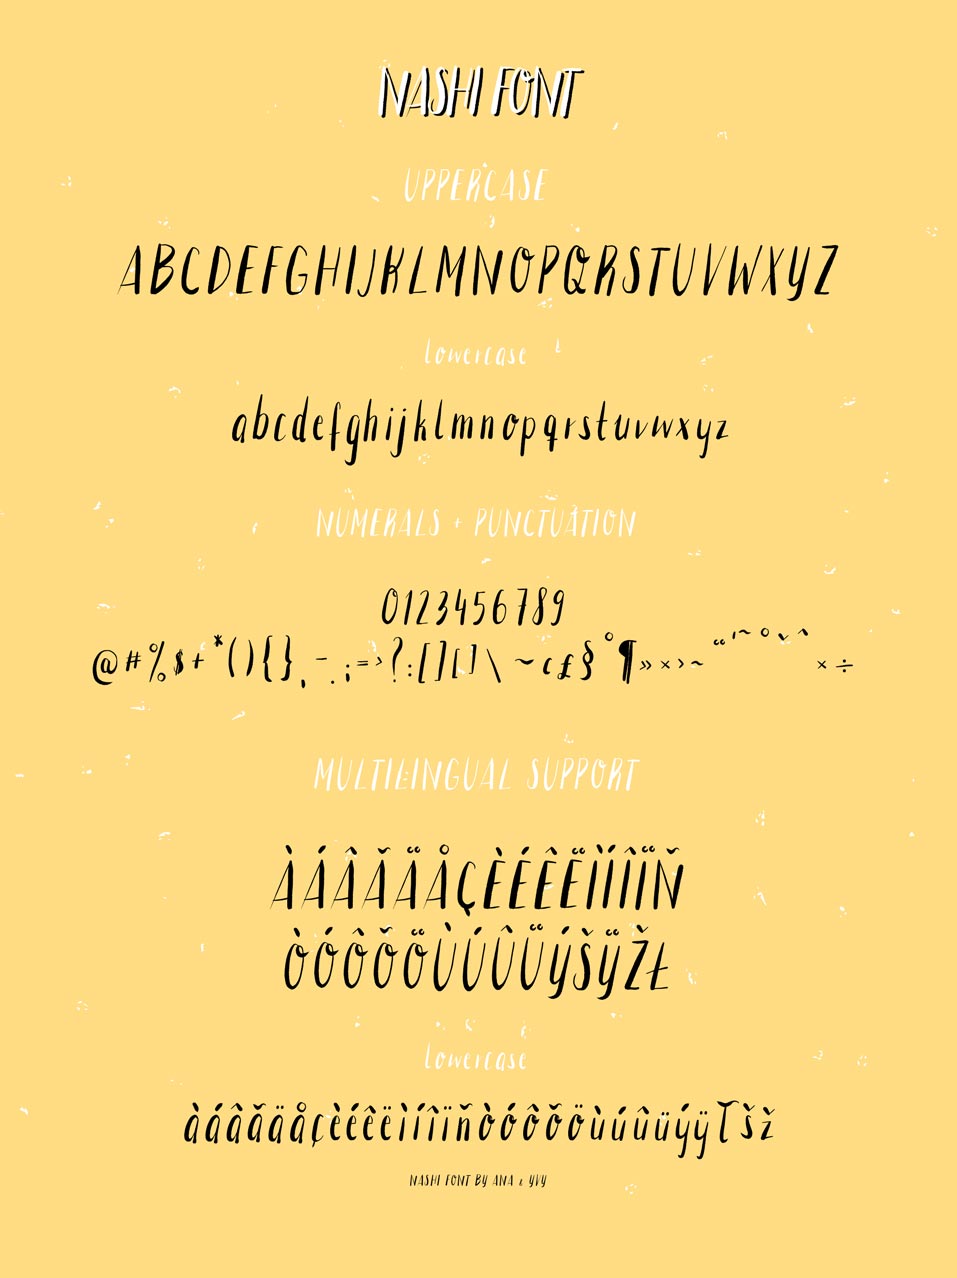 Nashi | Handwritten Quote Font - ANA & YVY